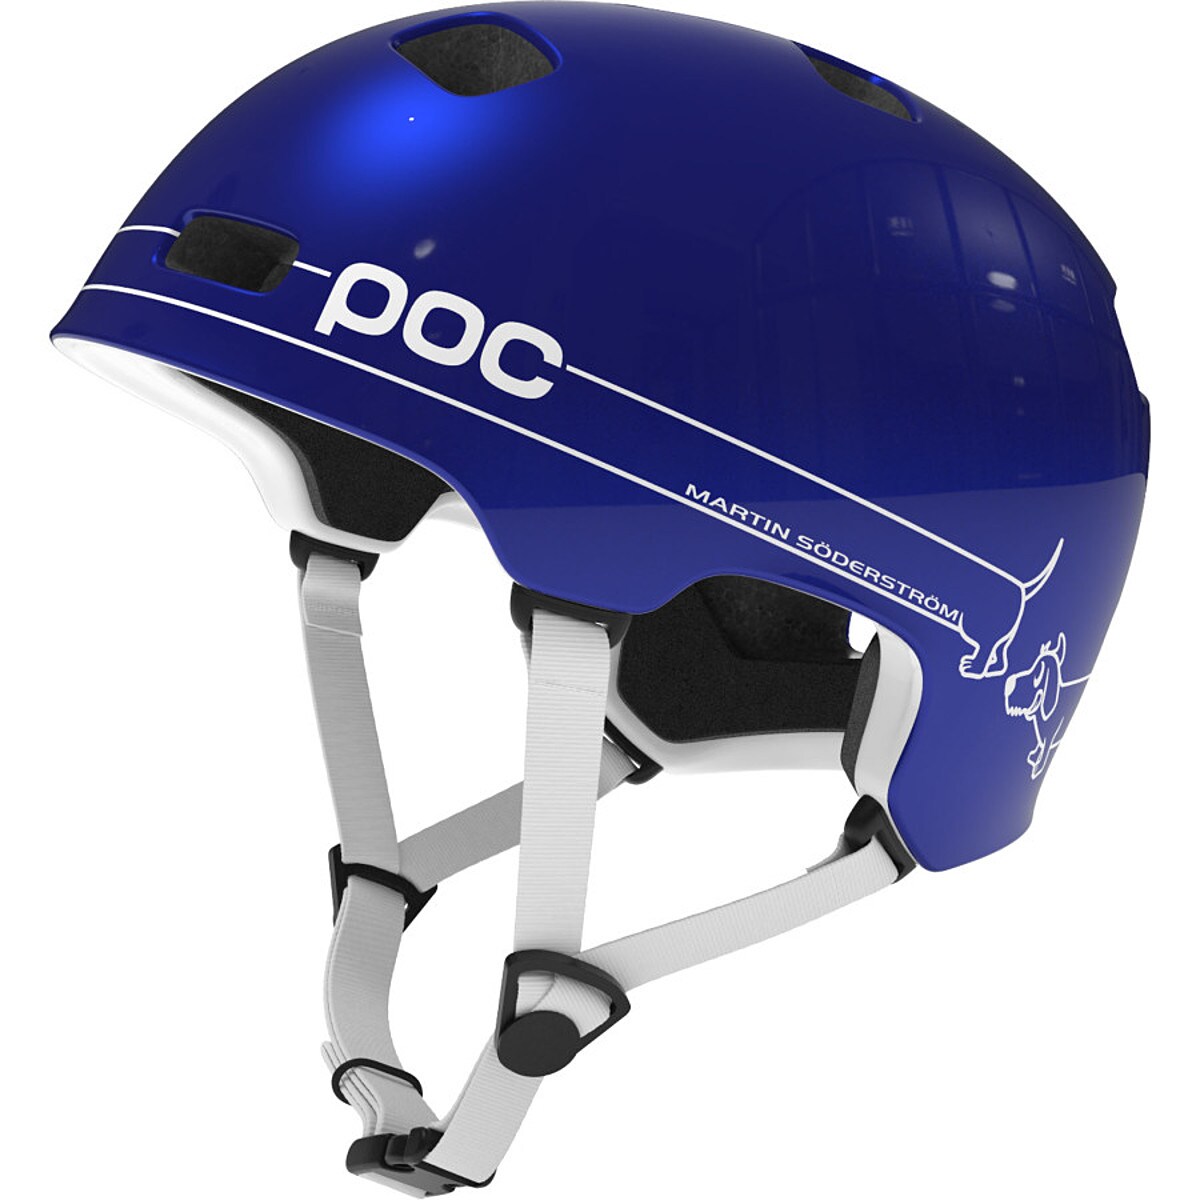 POC Crane Pure Soderstrom Helmet